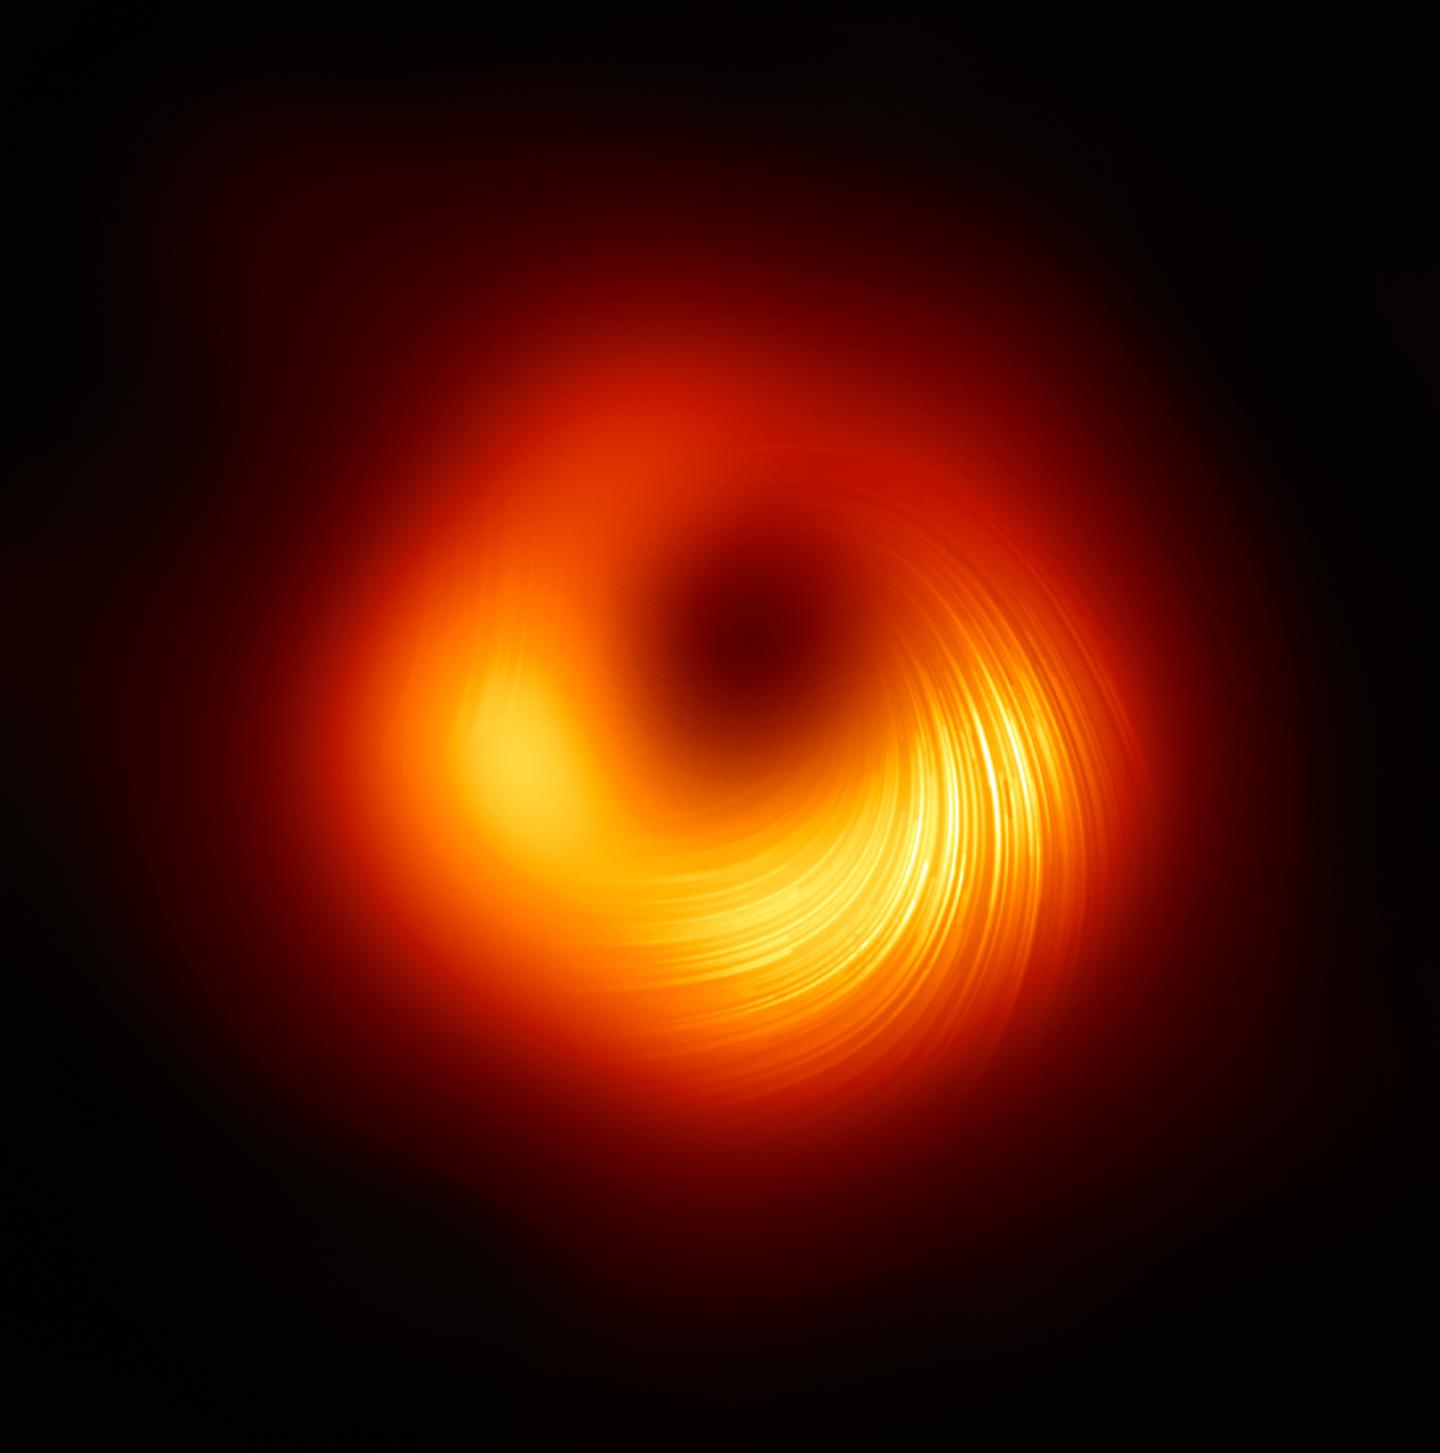 A Black Hole in Polarized Light